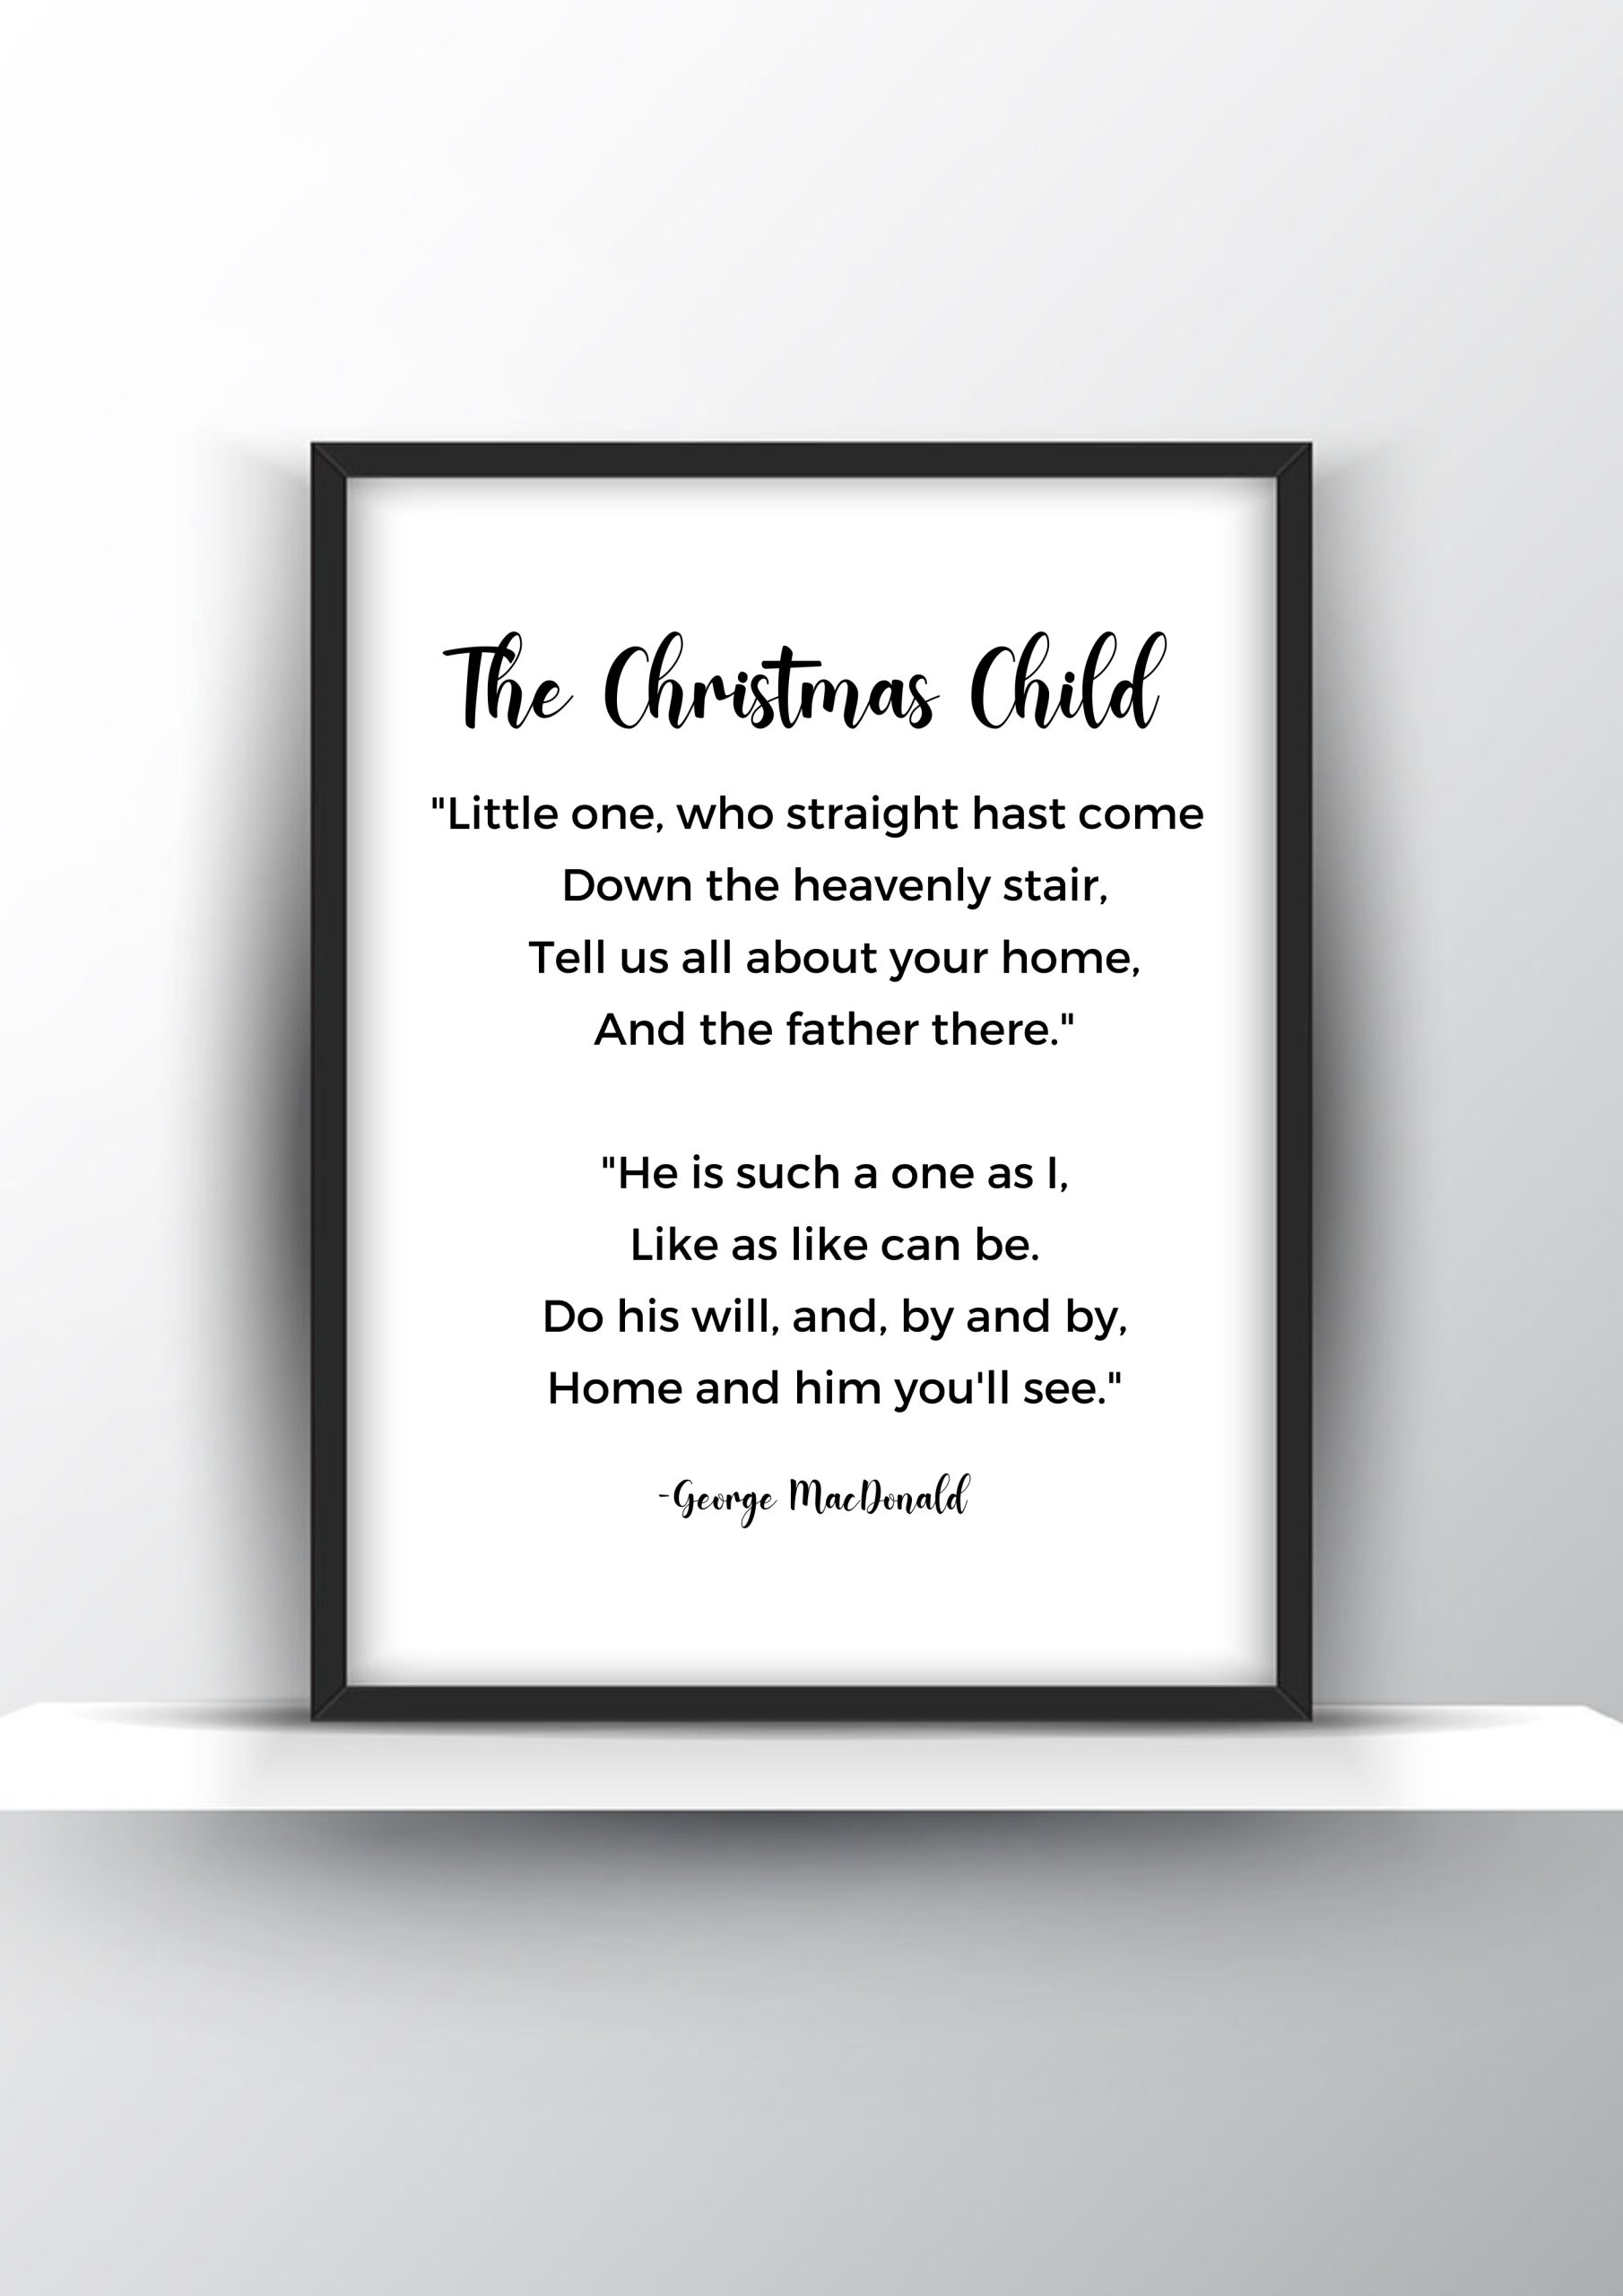 The Christmas Child Poem by George MacDonald Printable Wall Art